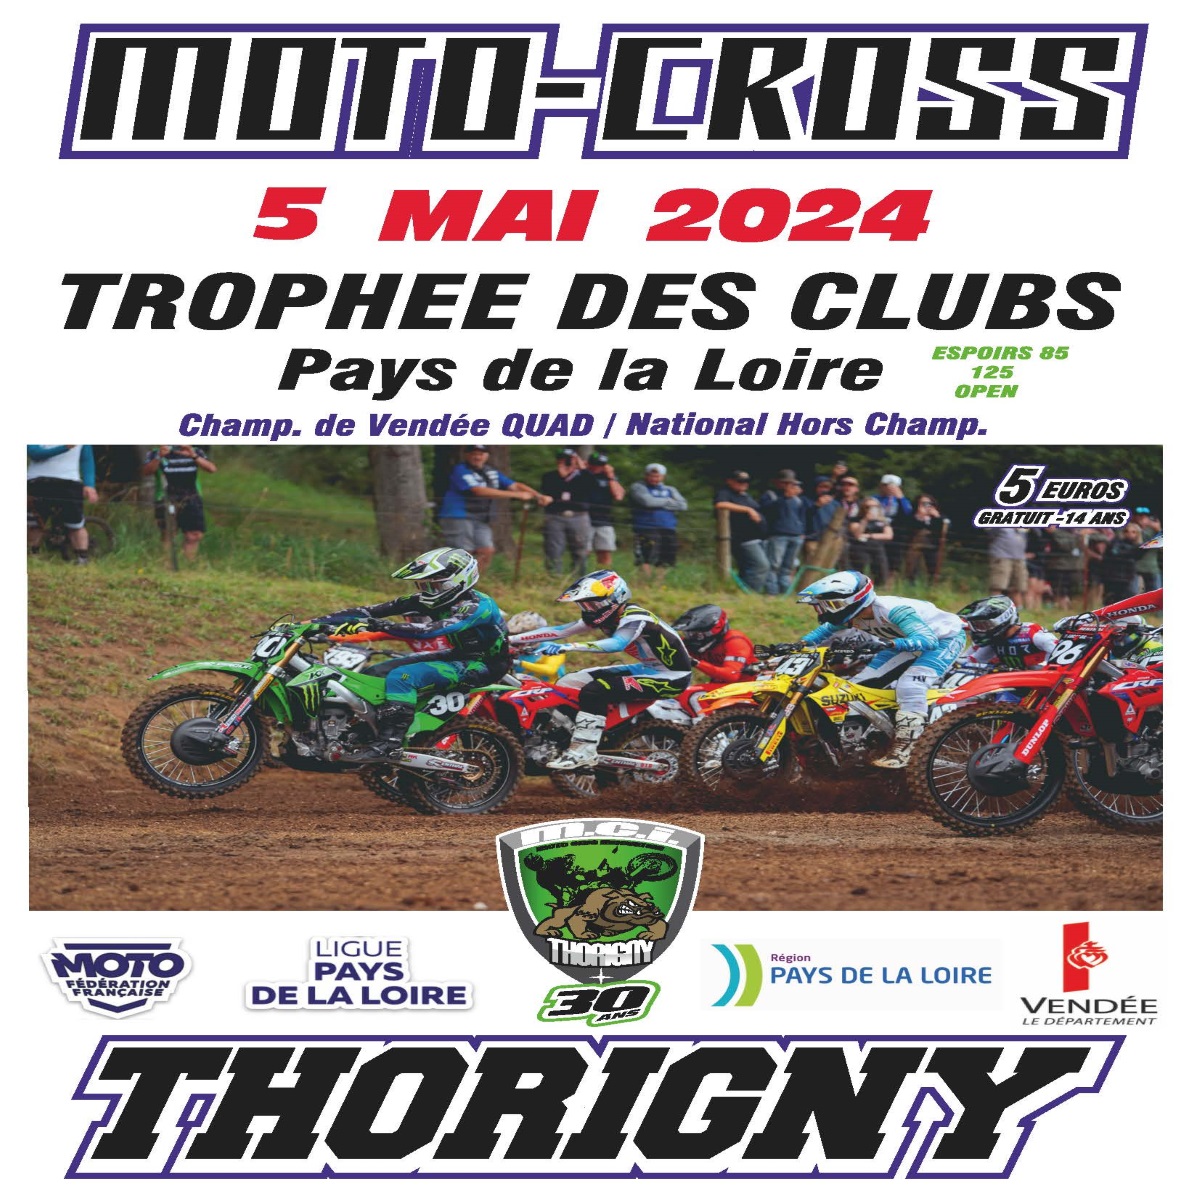 Info Motocross - Thorigny 5 mai